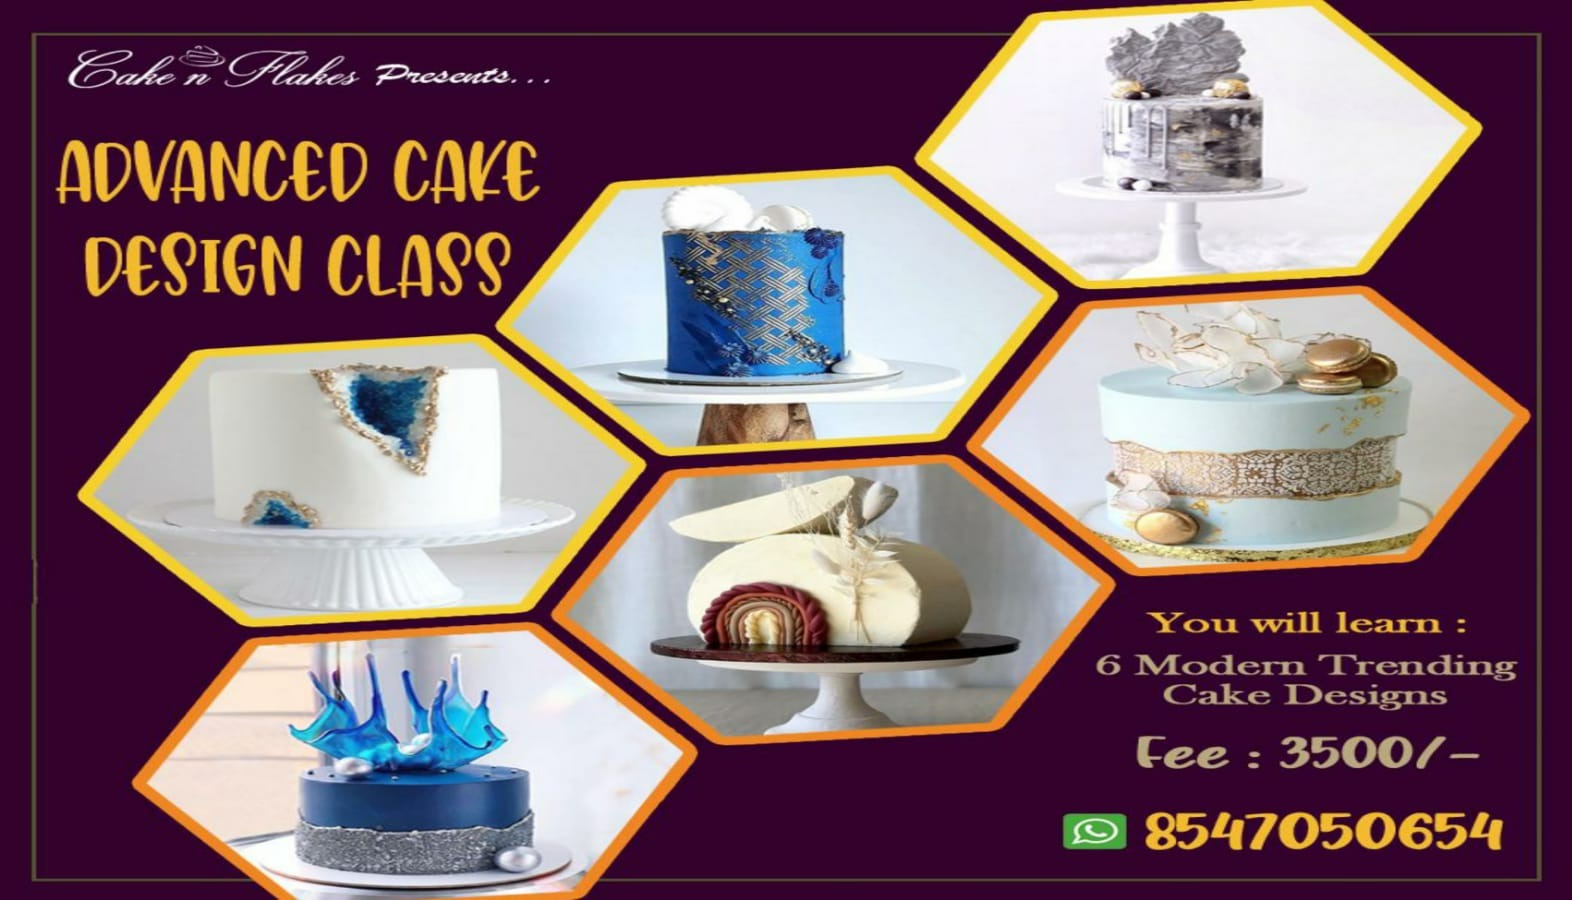 Advanced Cake Design Class